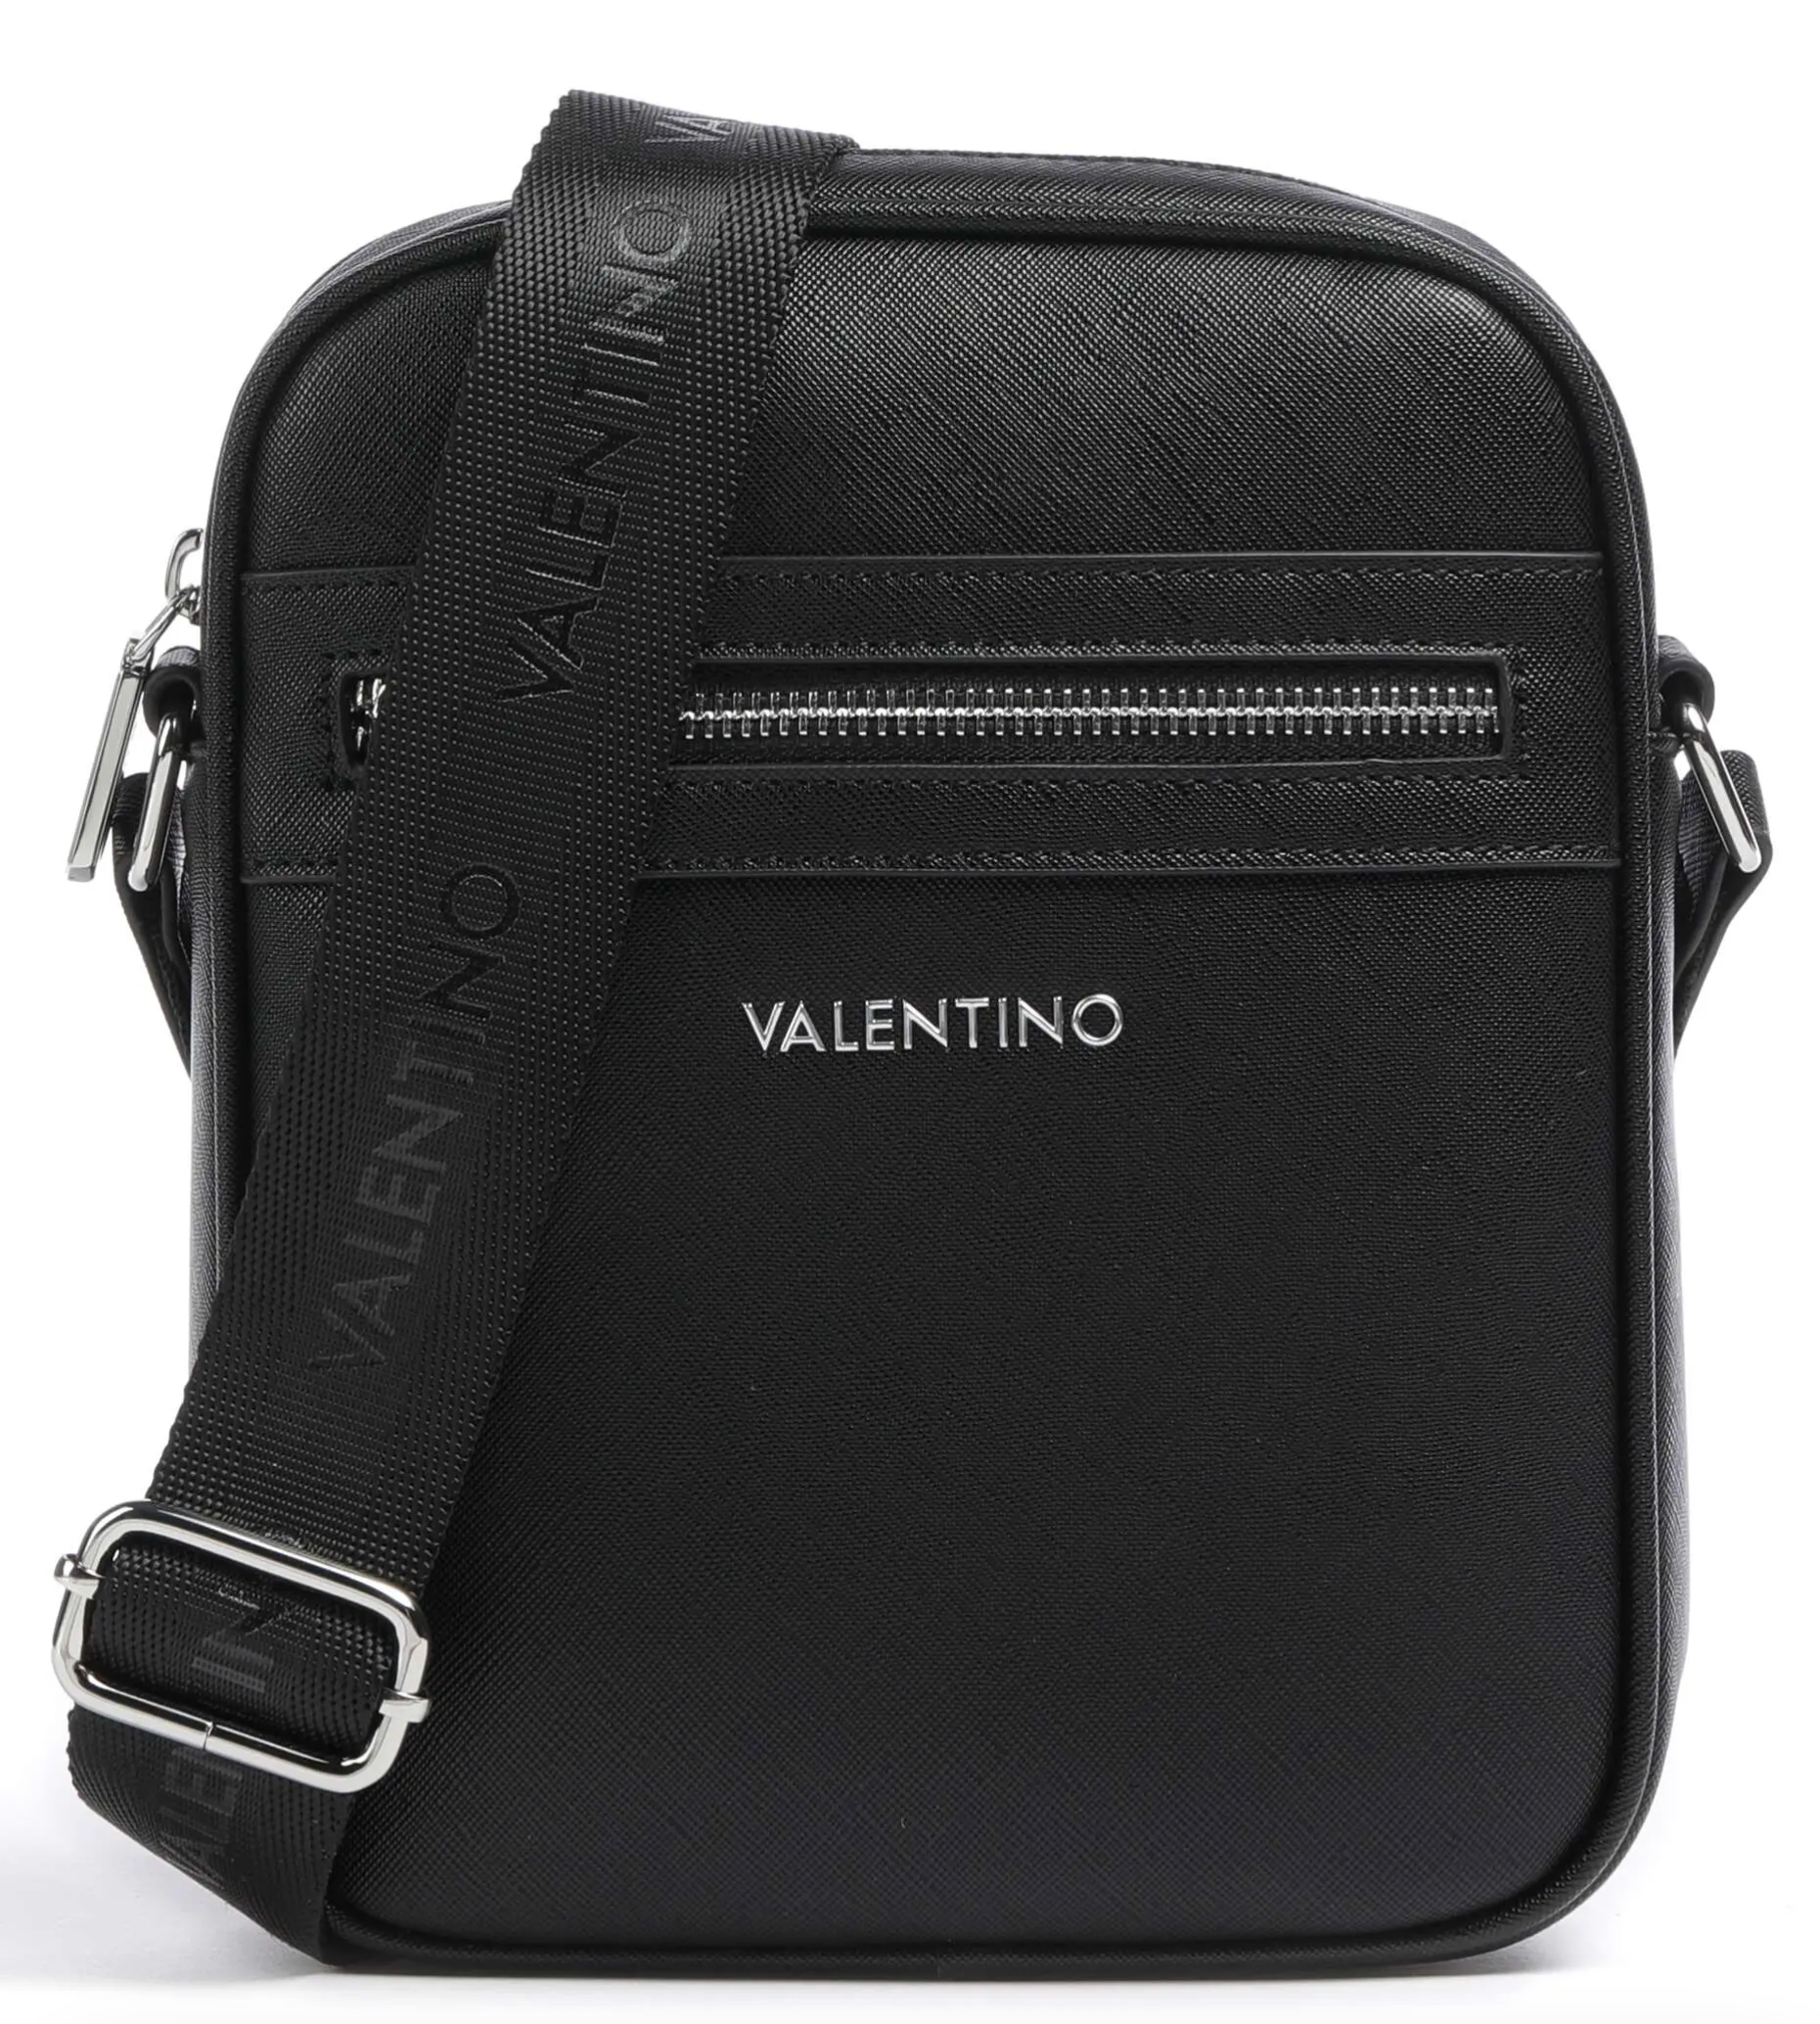 Valentino "MARINER" Cross Body Bag Black